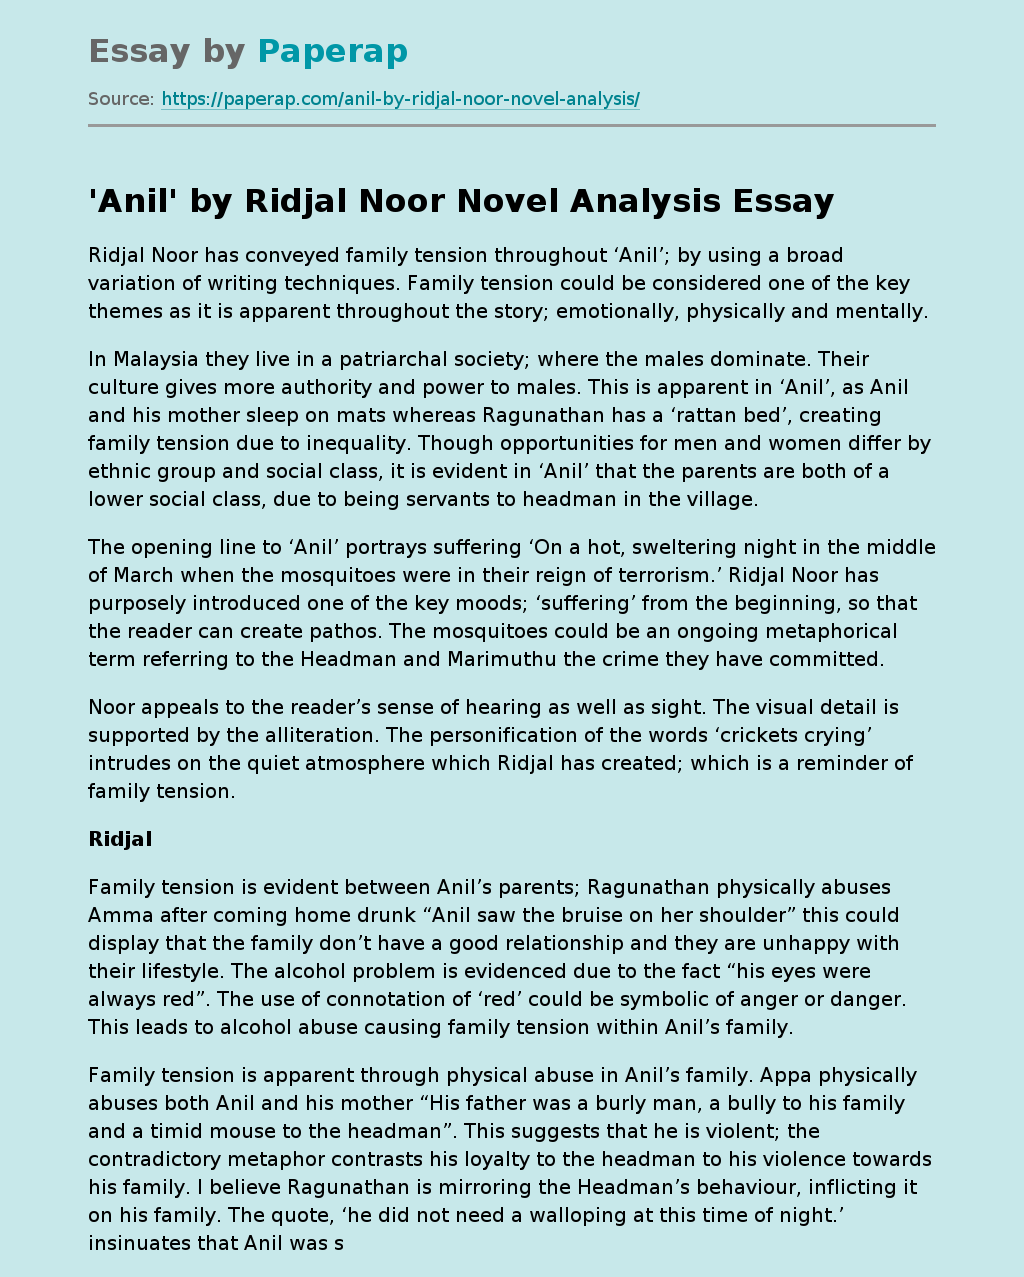 'Anil' by Ridjal Noor Novel Analysis